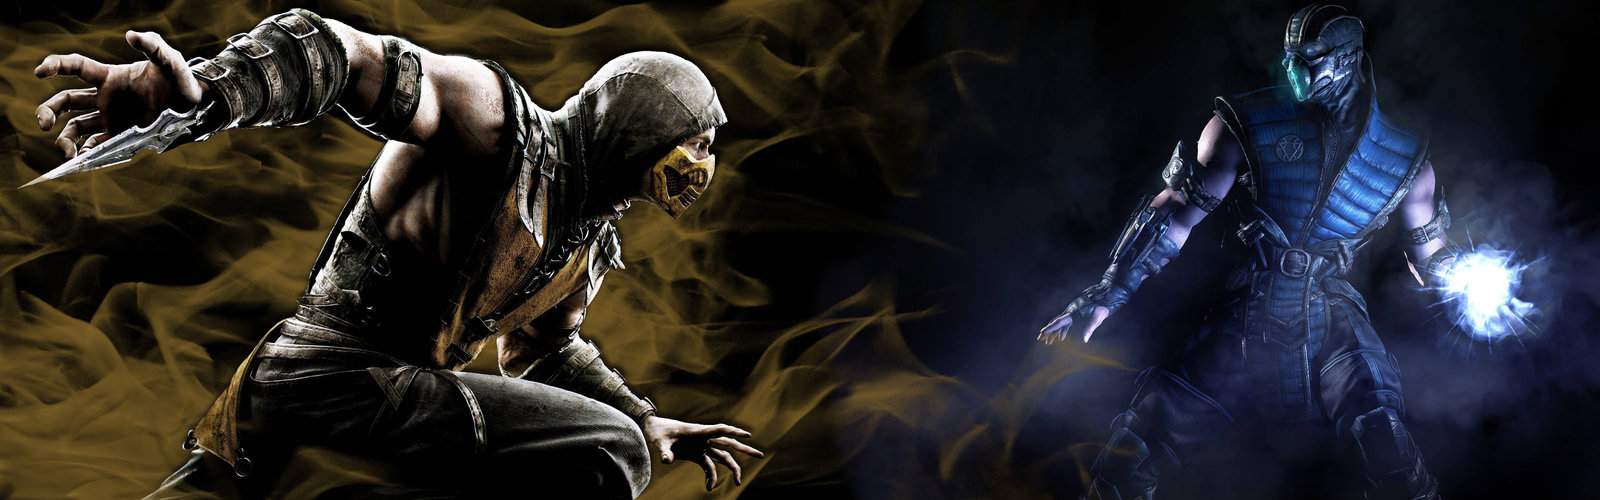 Mortal Kombat X Background Scorpion Vs Sub Zero By Hentiger5544 On